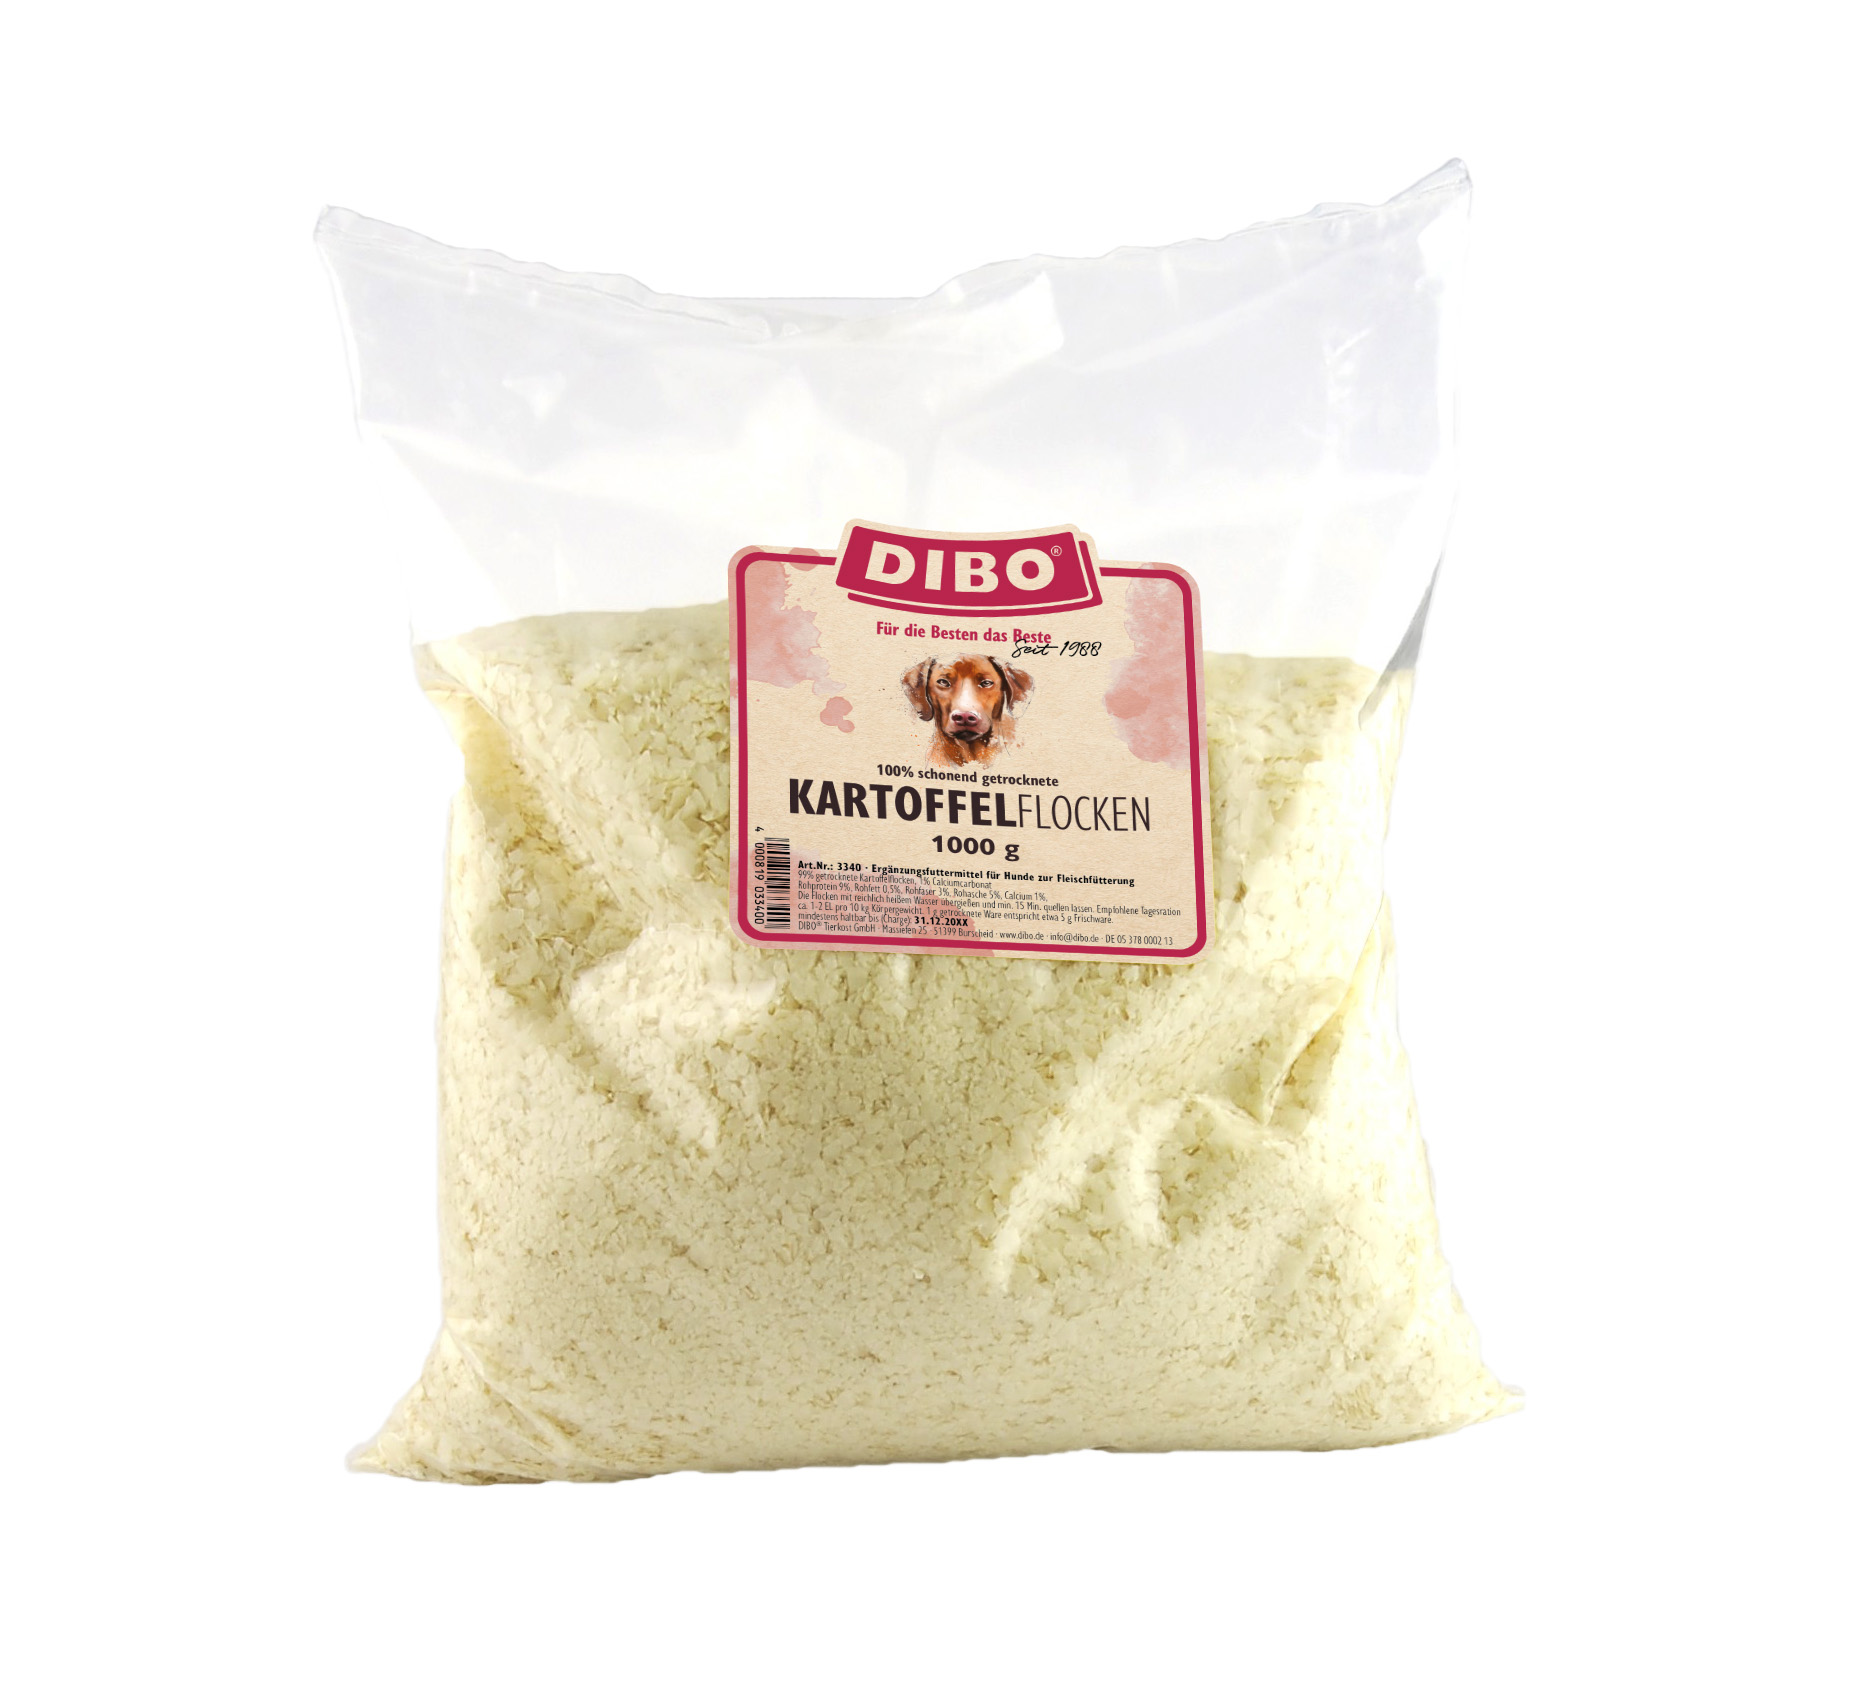 DIBO Kartoffelflocken, 1kg-Beutel